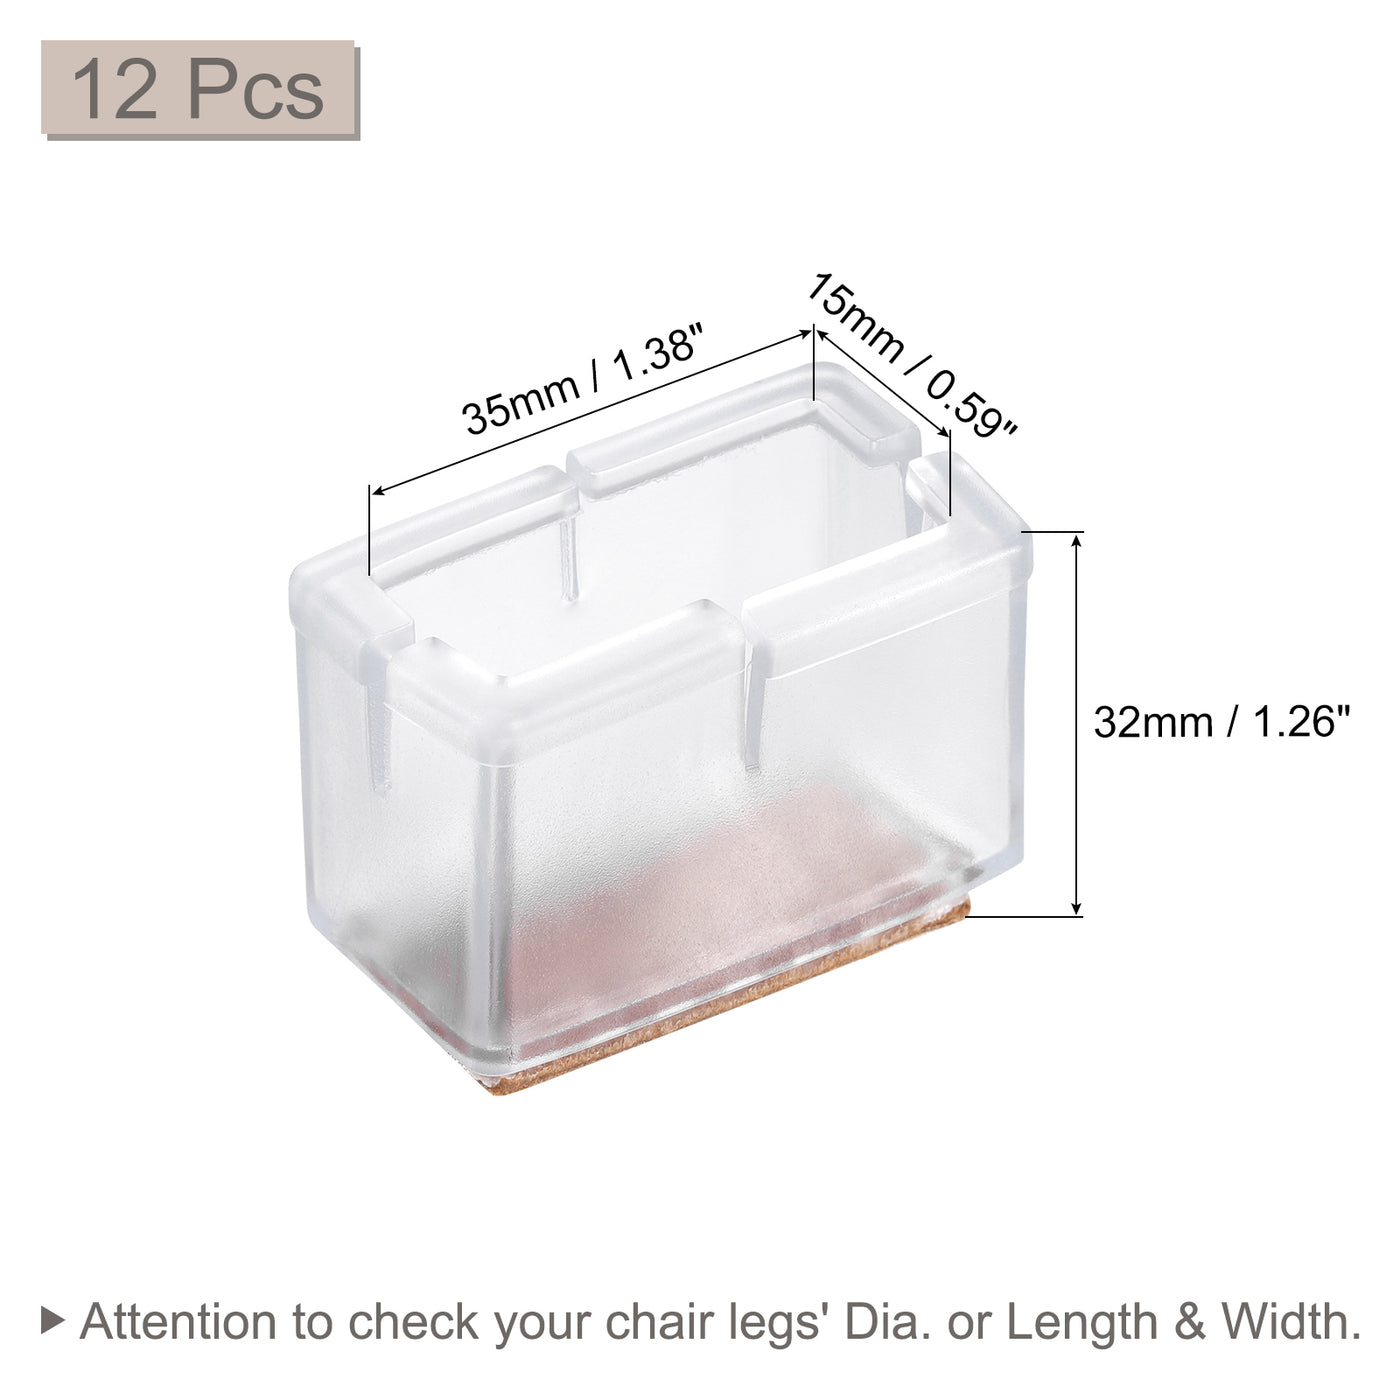 uxcell Uxcell Chair Leg Floor Protectors, 12Pcs 35mm(1.38") Rectangle PVC & Felt Chair Leg Cover Caps for Hardwood Floors (Clear White)